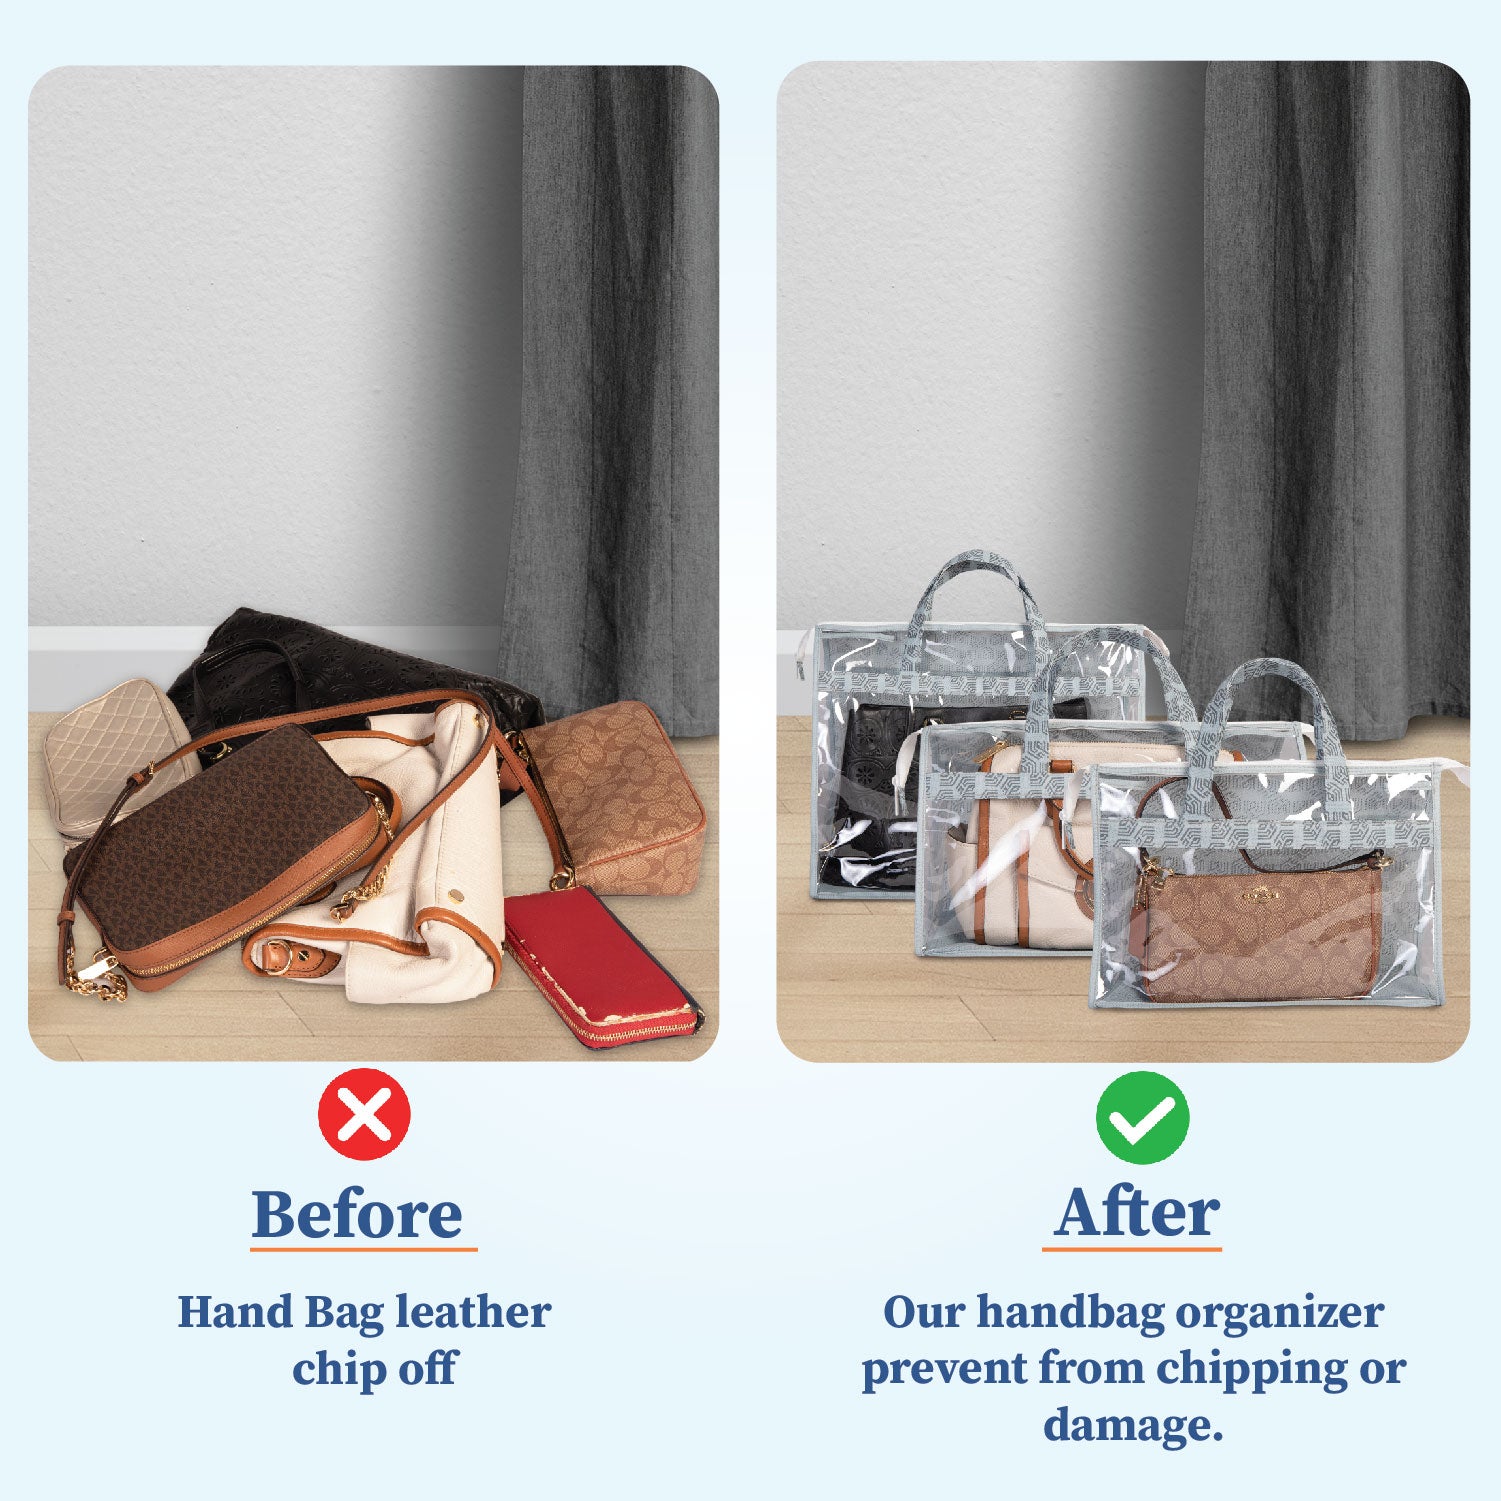 Buy Homeleven Handbag Purse Clutch Organizer Dustproof Bag Holder